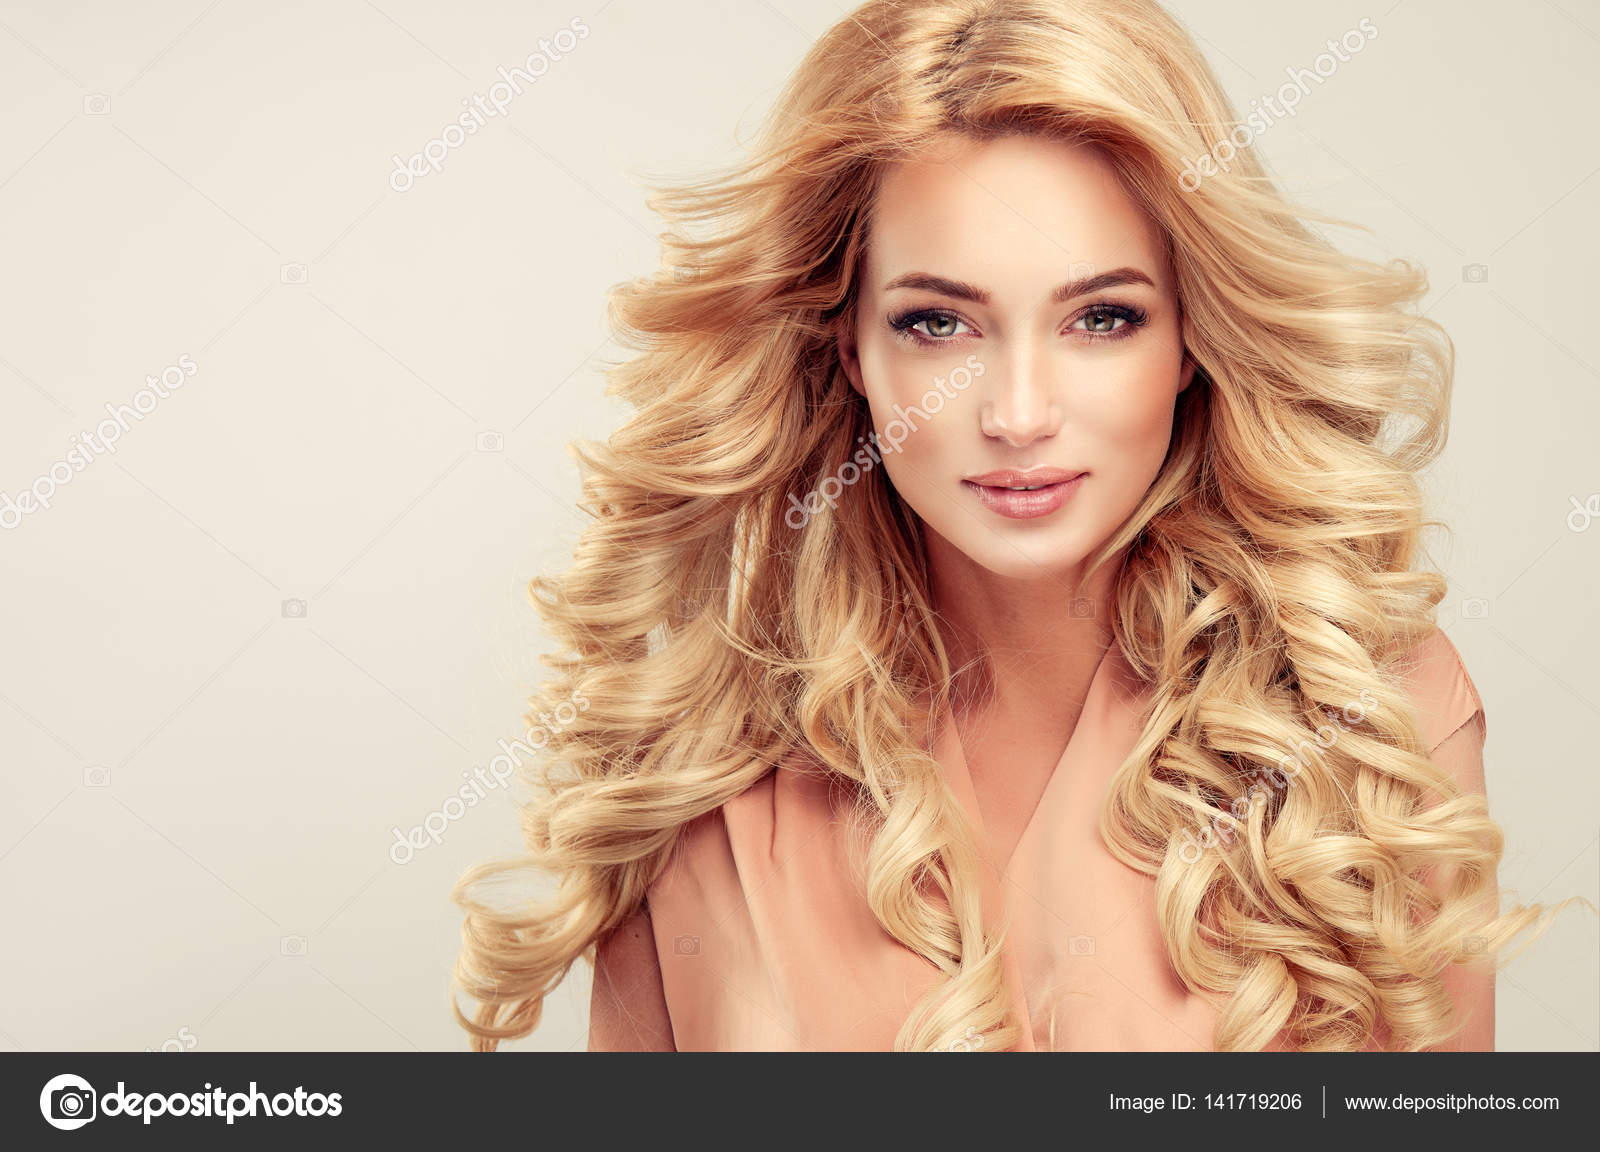 3. Tanish Blonde Hair Girl - Shutterstock - wide 8